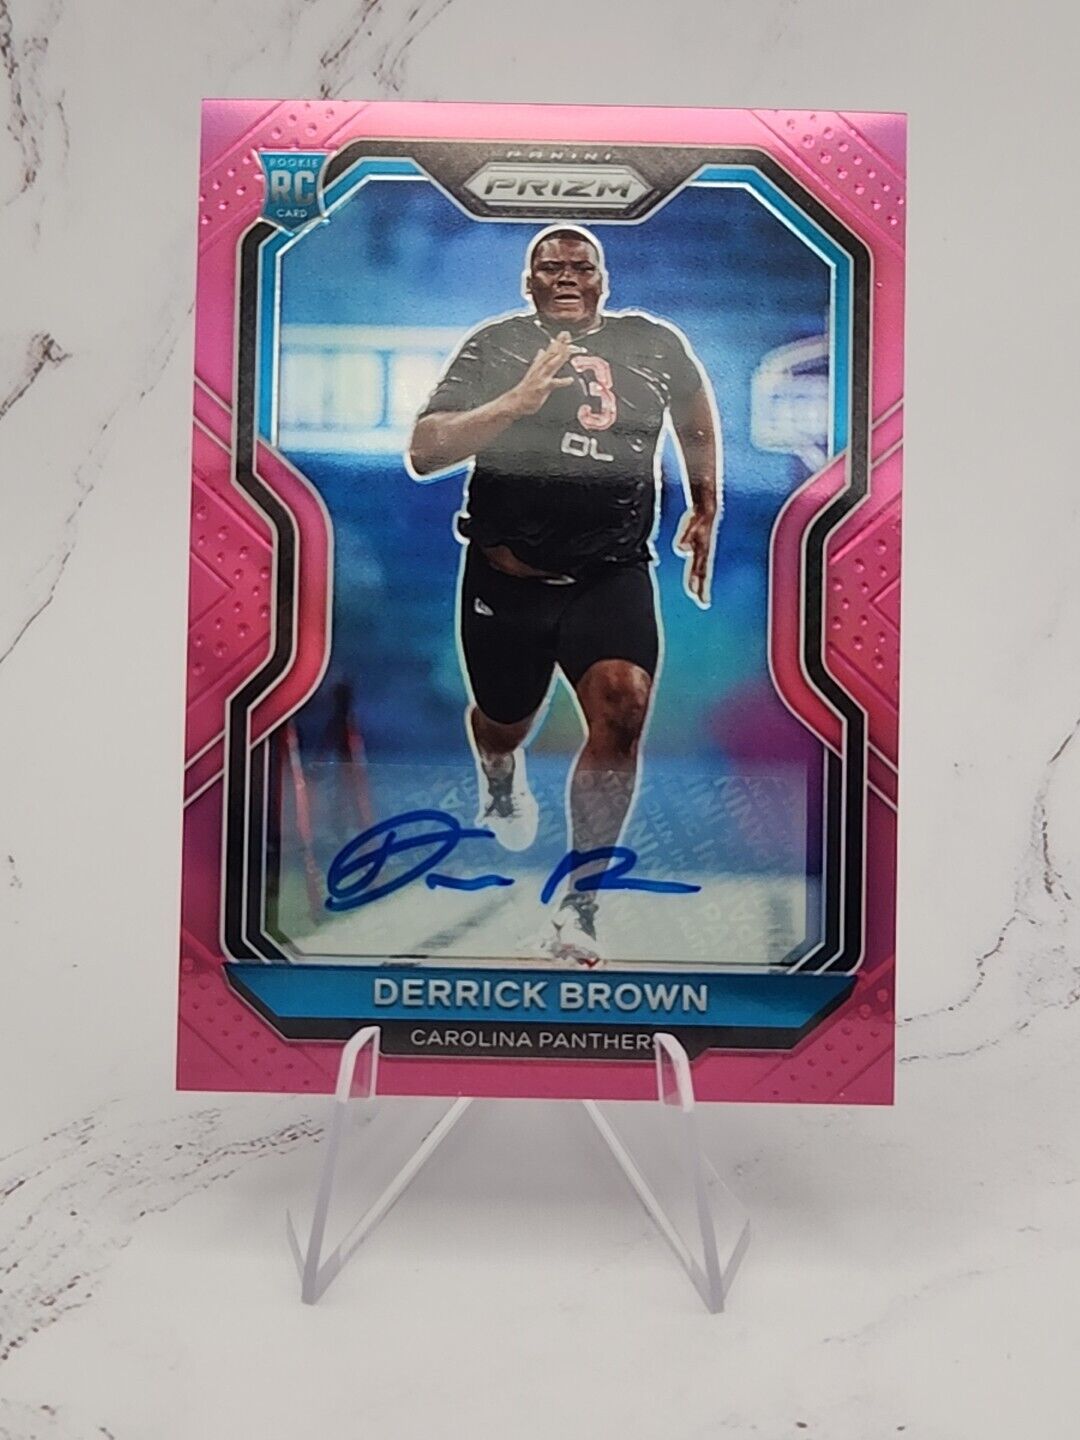 Derrick Brown 2020 Panini Prizm Pink Rookie Autograph RC Auto #365 Carolina